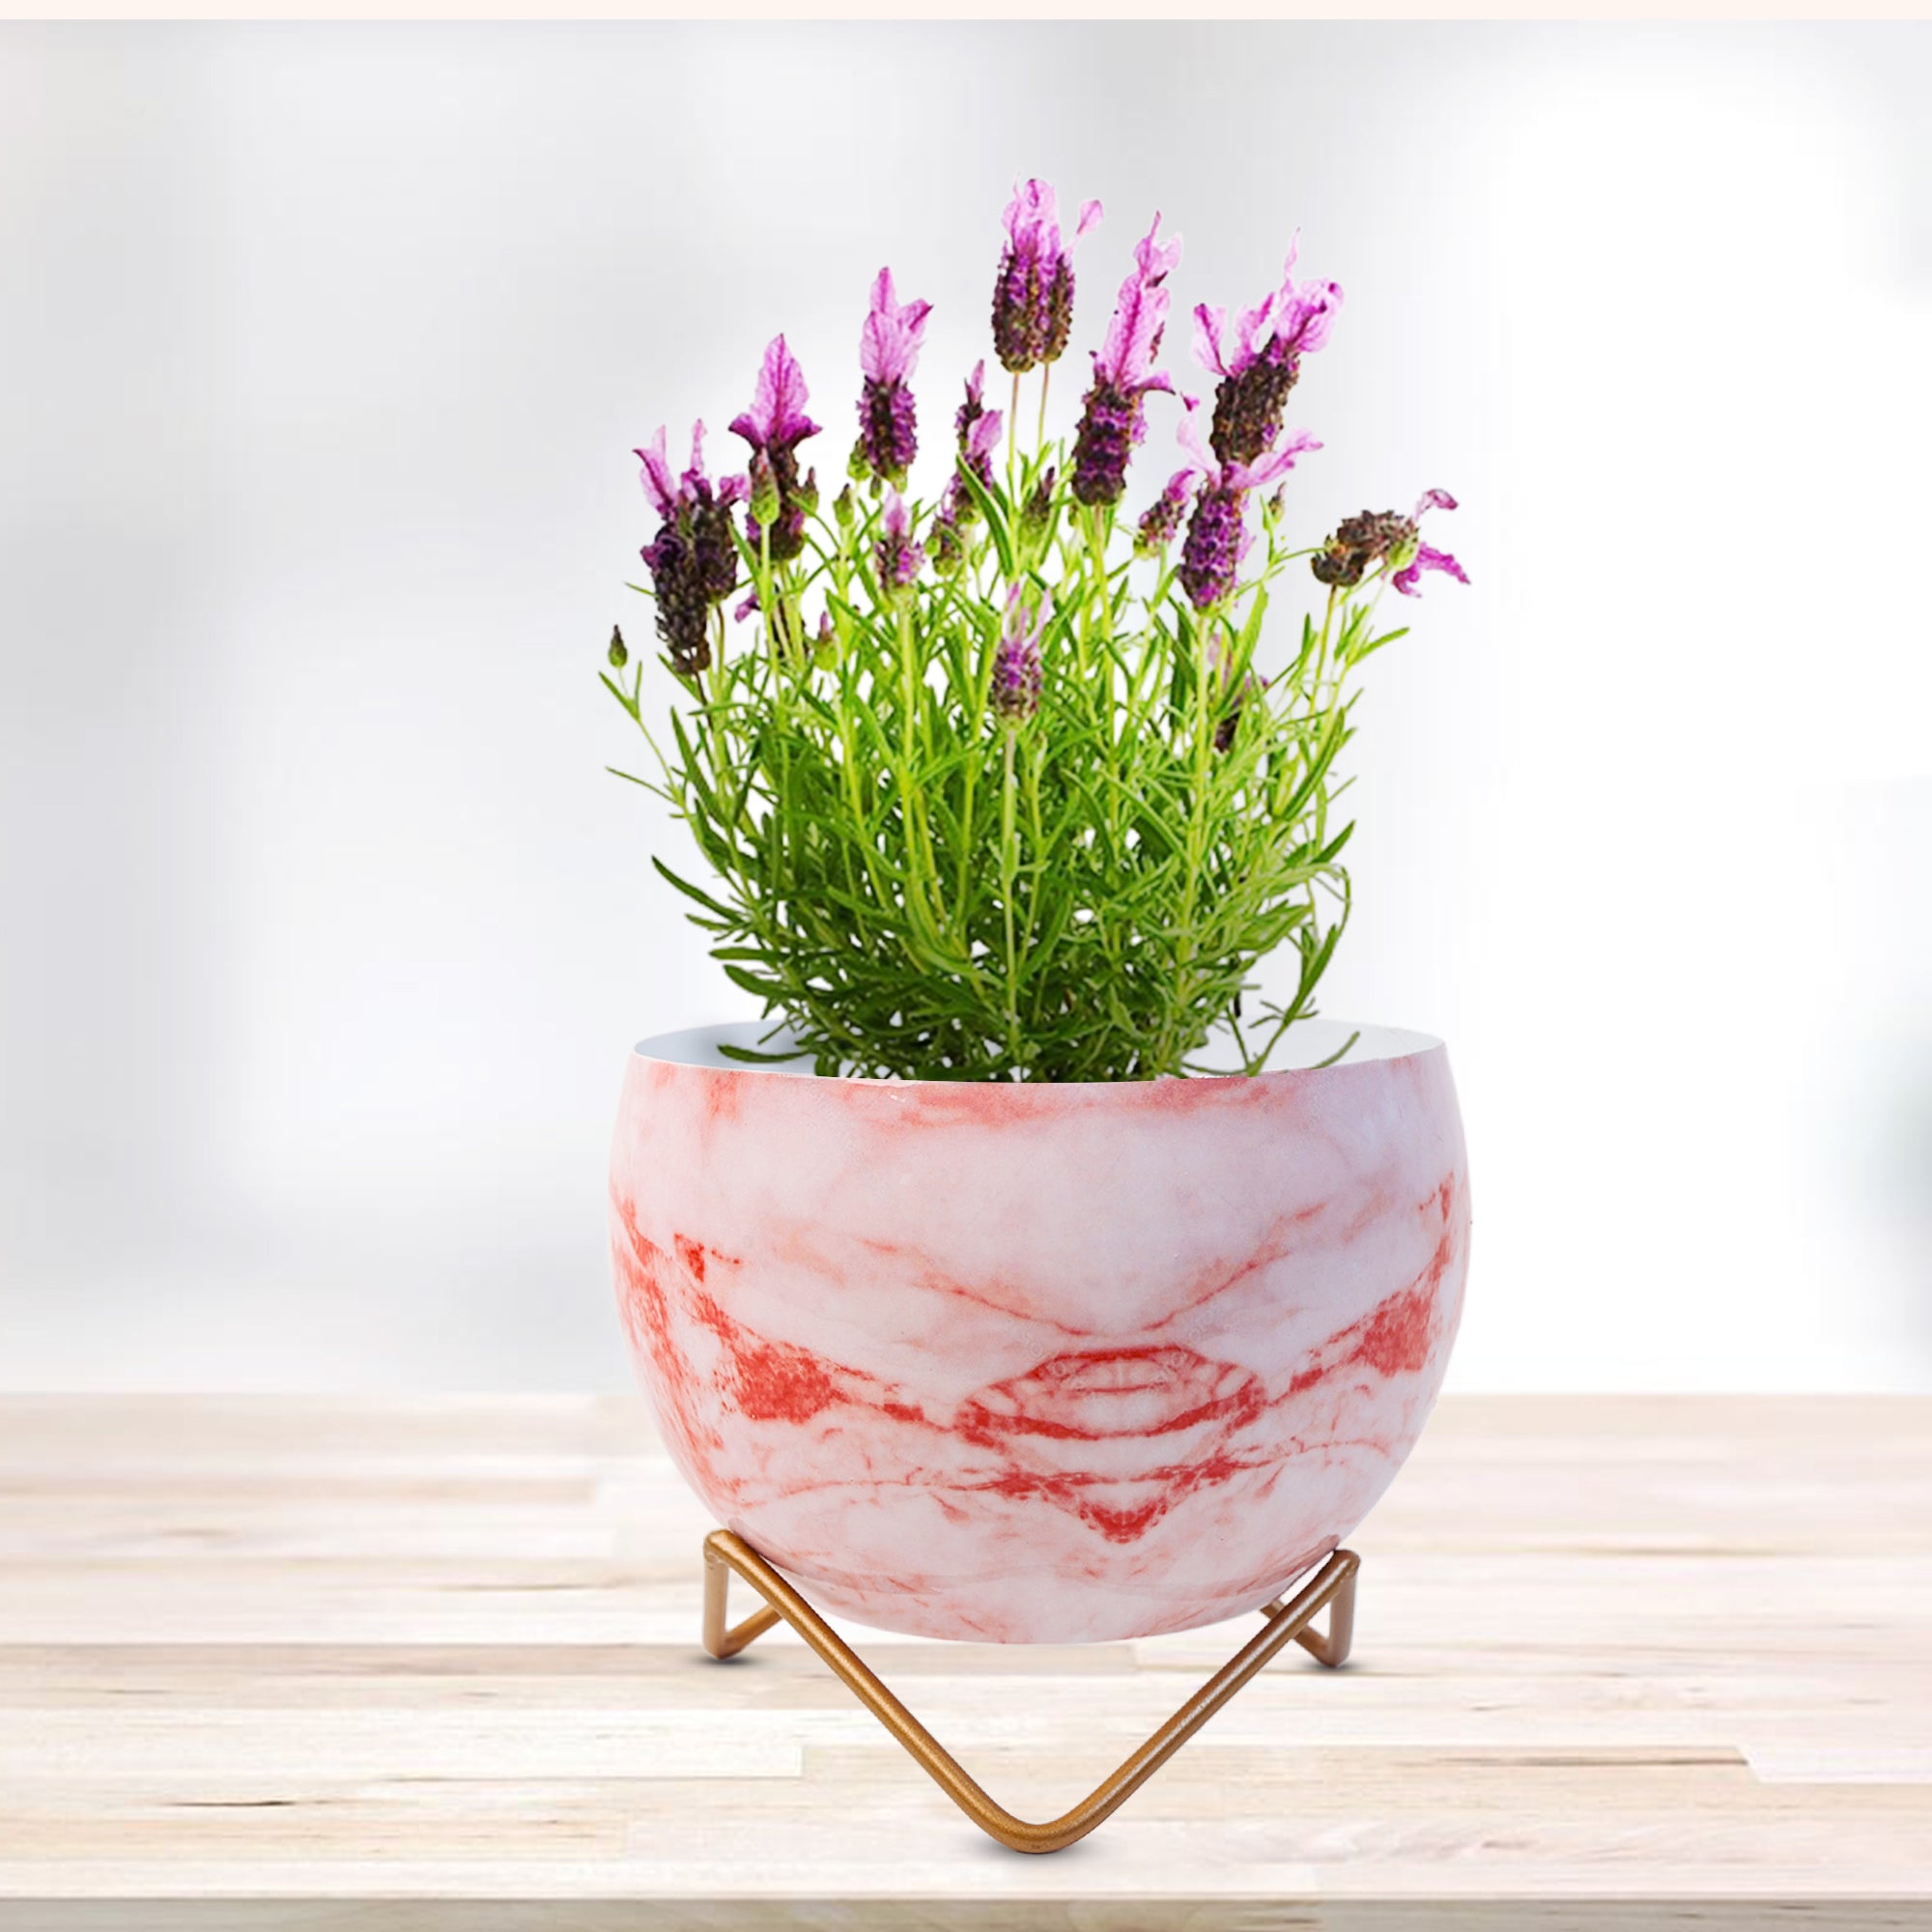 Indoor Metal decor Vase/Planter- Red & White Set of 2